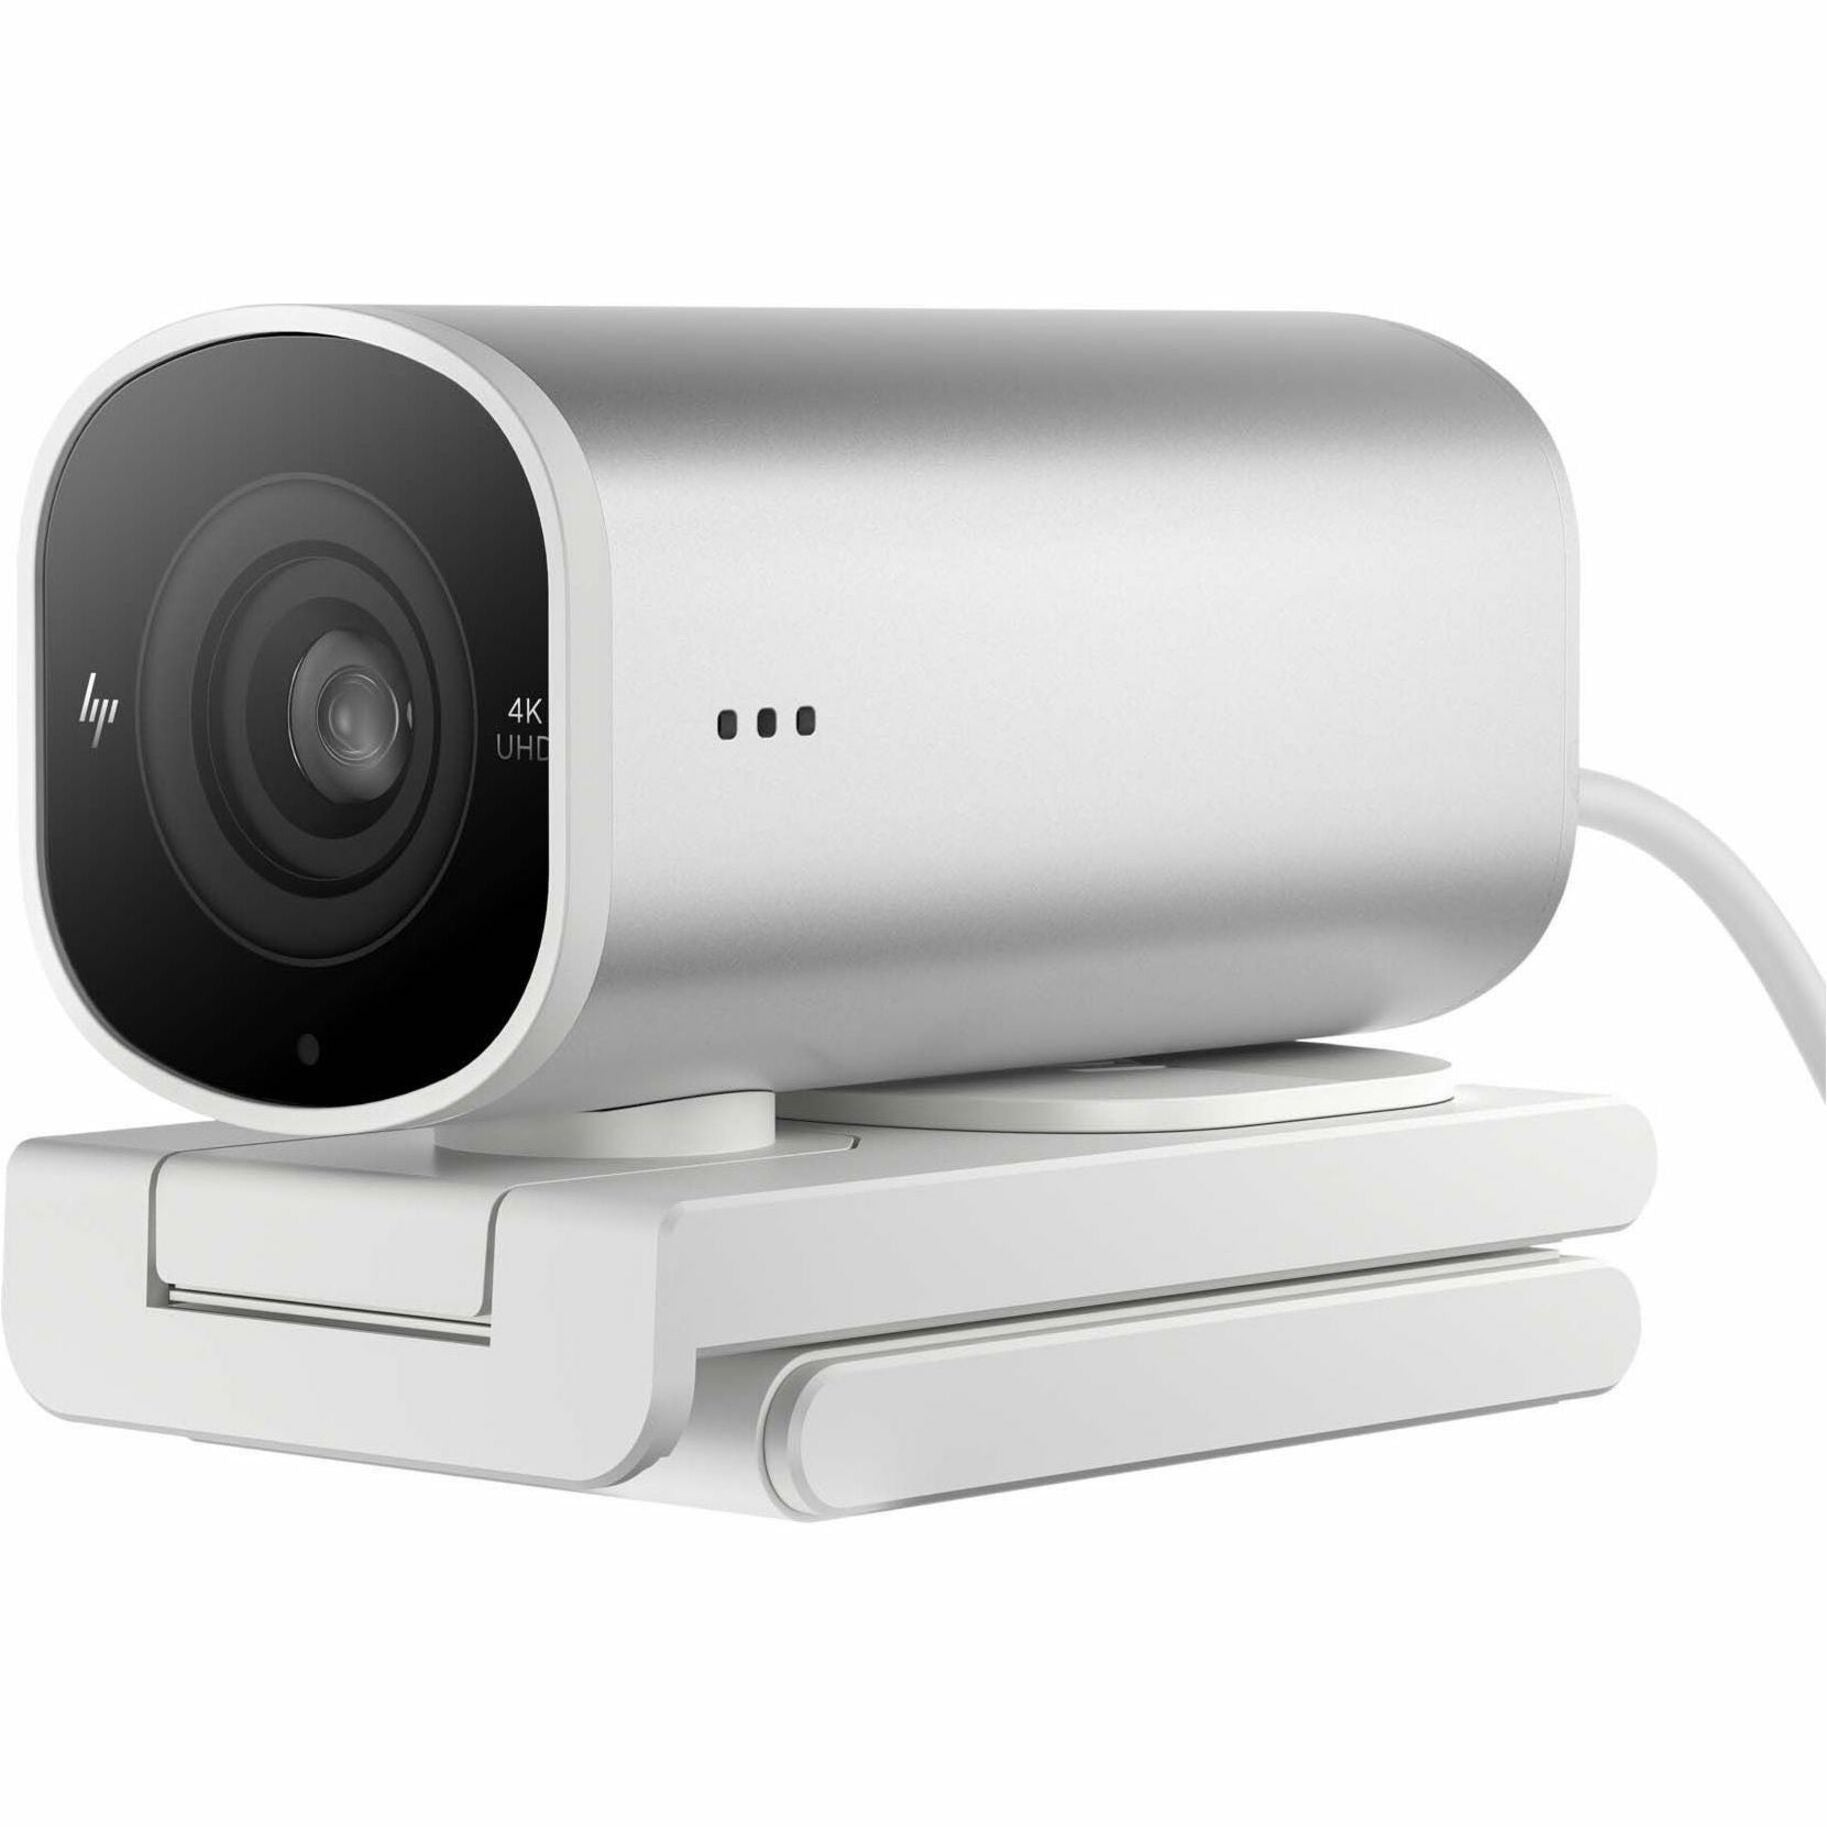 HP 960 Webcam - 8 Megapixel - 60 fps - Silver - USB 3.0 Type A (695J6AA#ABL)